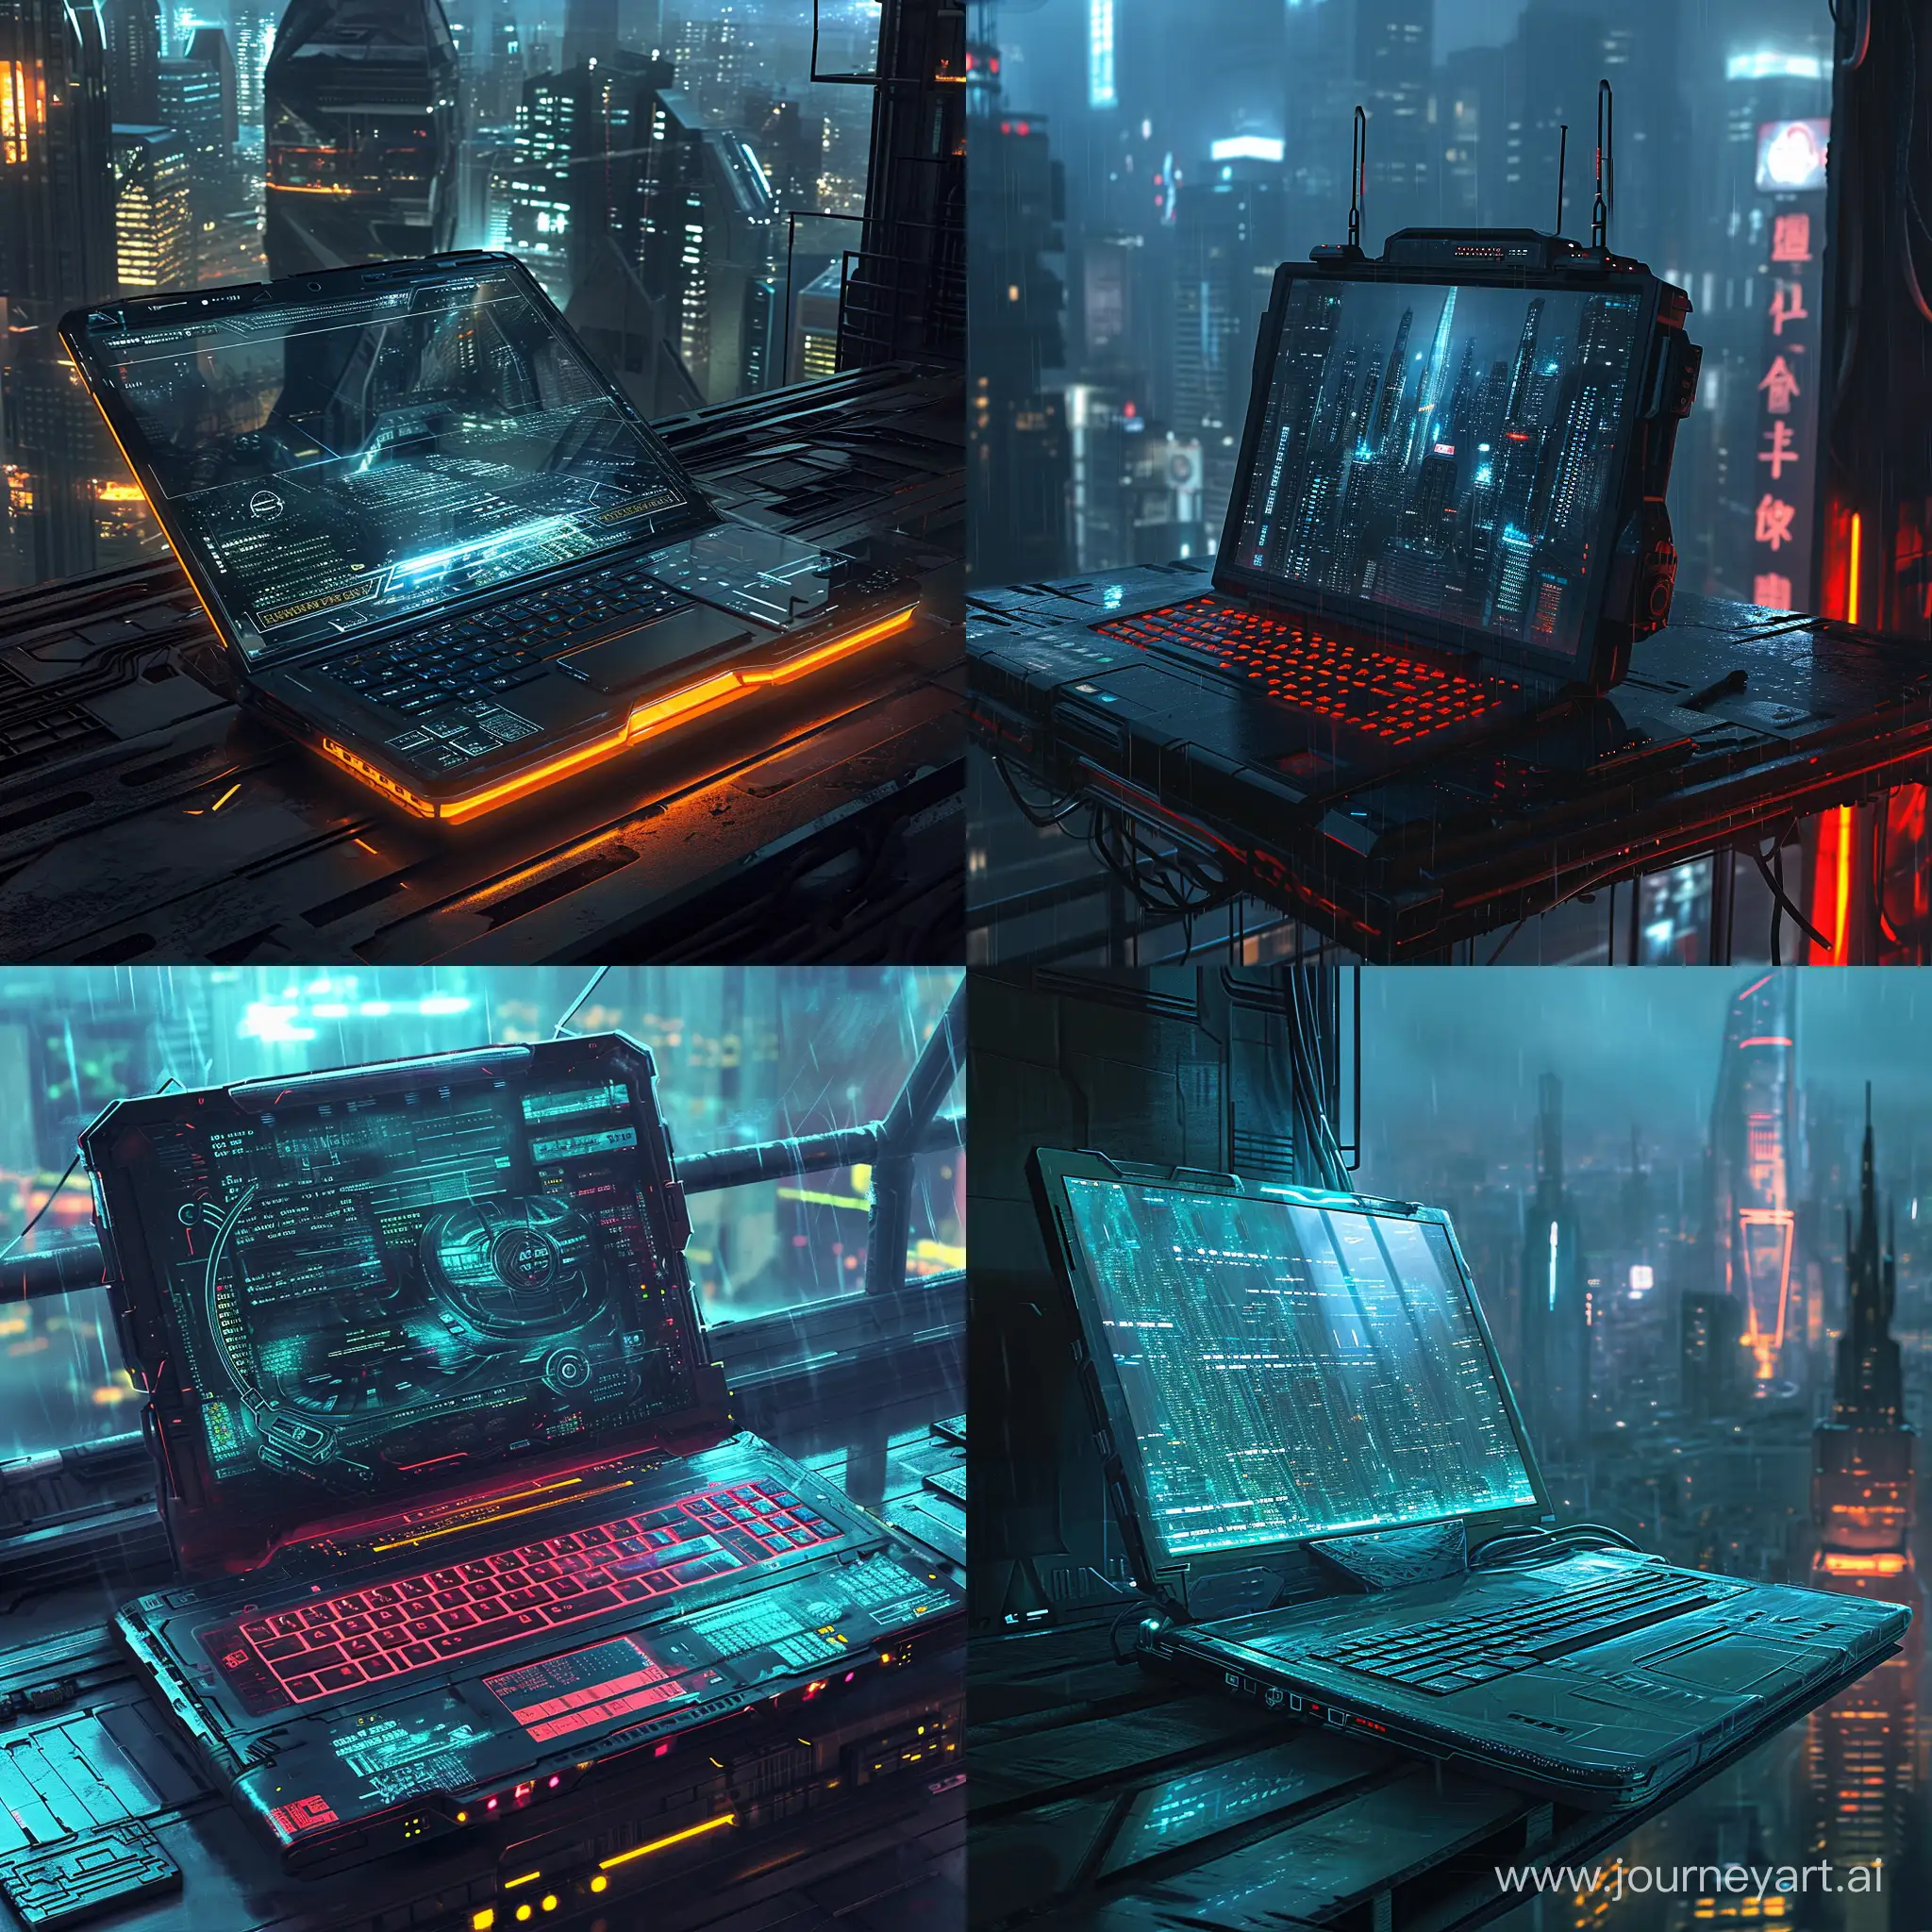 Futuristic-Blade-Runner-Laptop-in-Utopian-SciFi-Setting